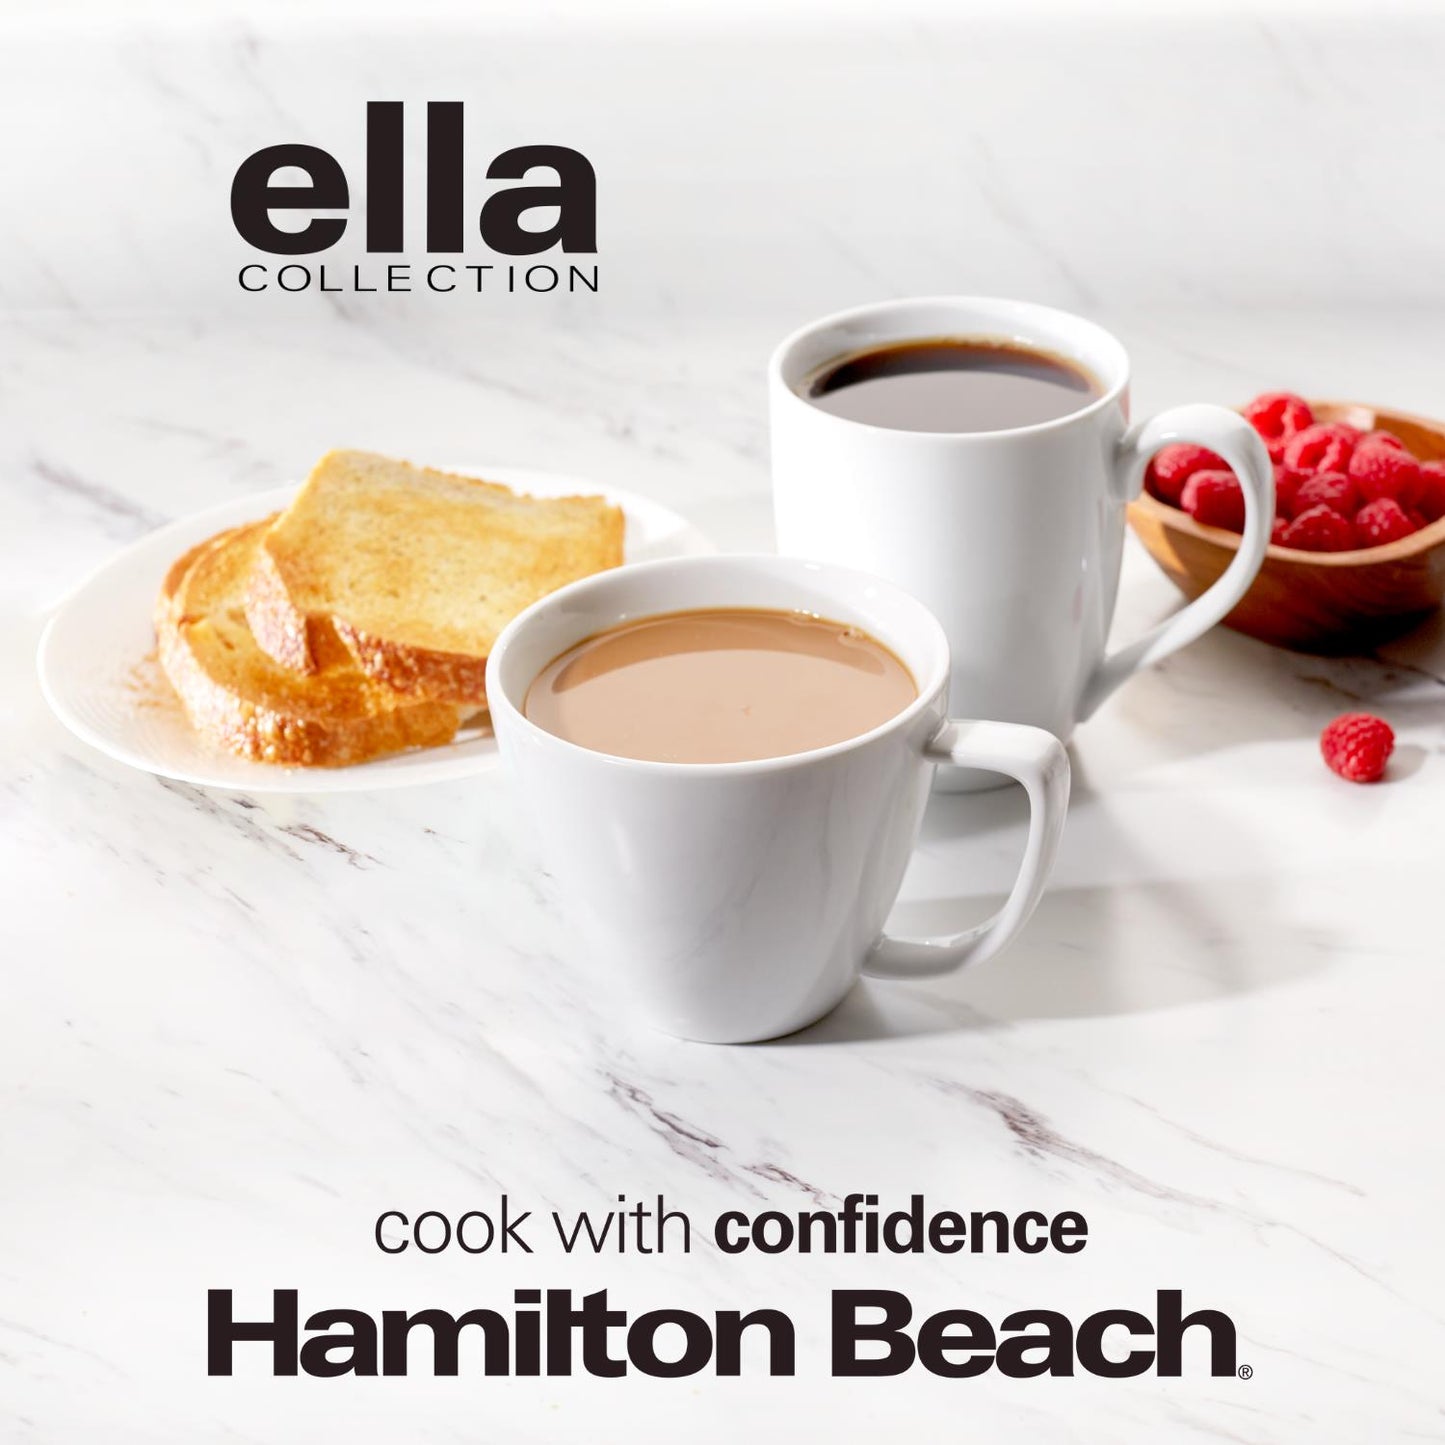 Hamilton Beach Ella Cream Breakfast Bundle